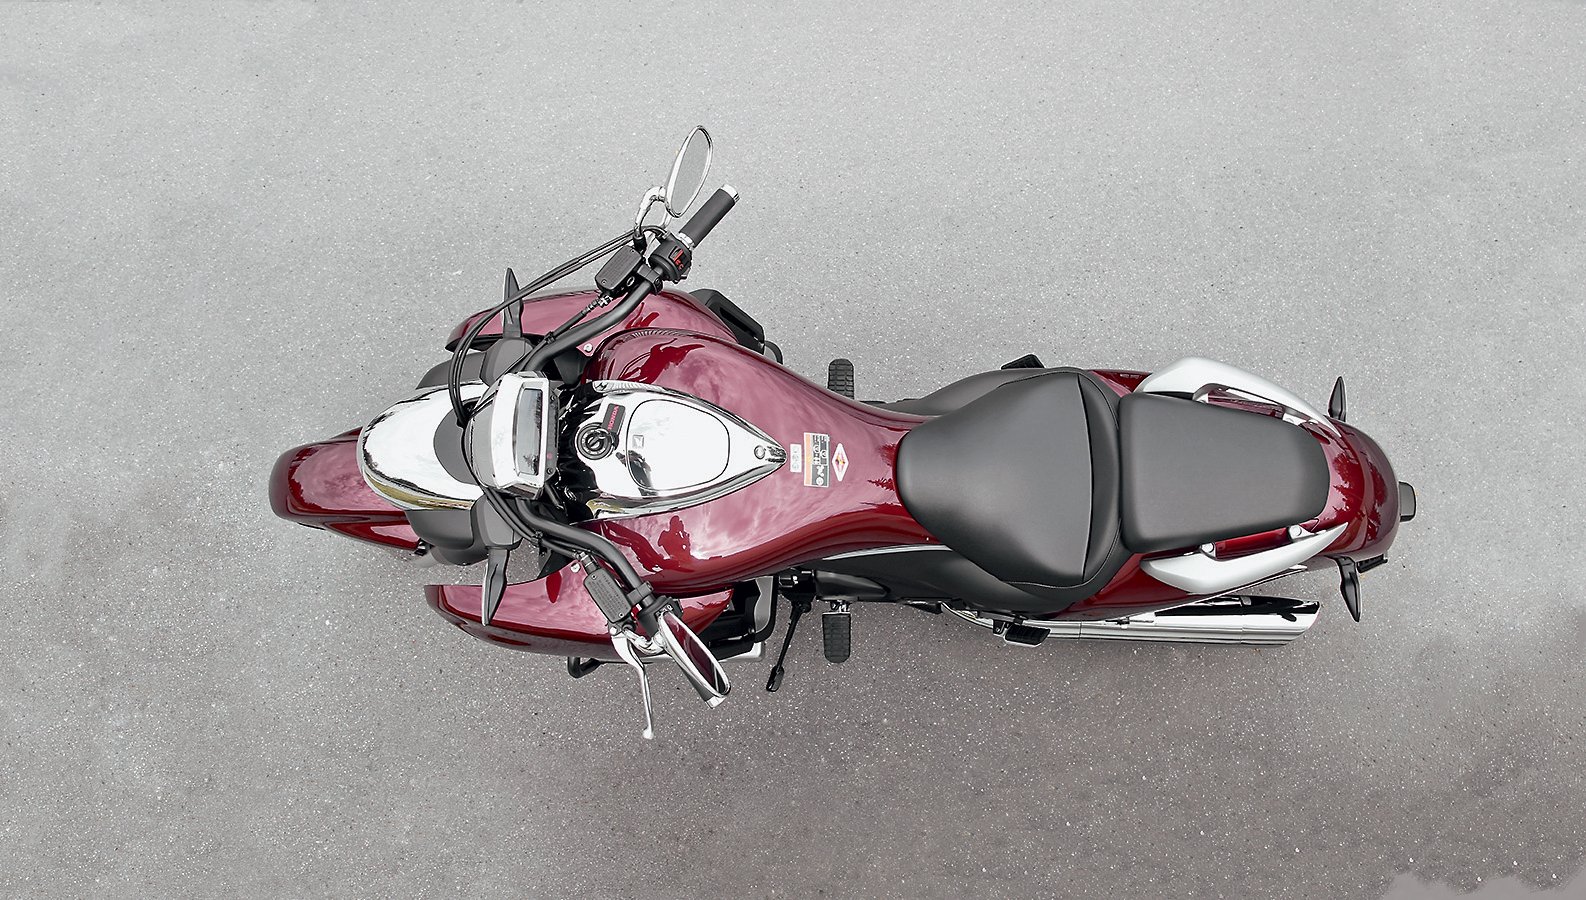 Обзор мотоцикла honda valkyrie 1800 (honda gl1800c f6c valkyrie) — bikeswiki - энциклопедия японских мотоциклов